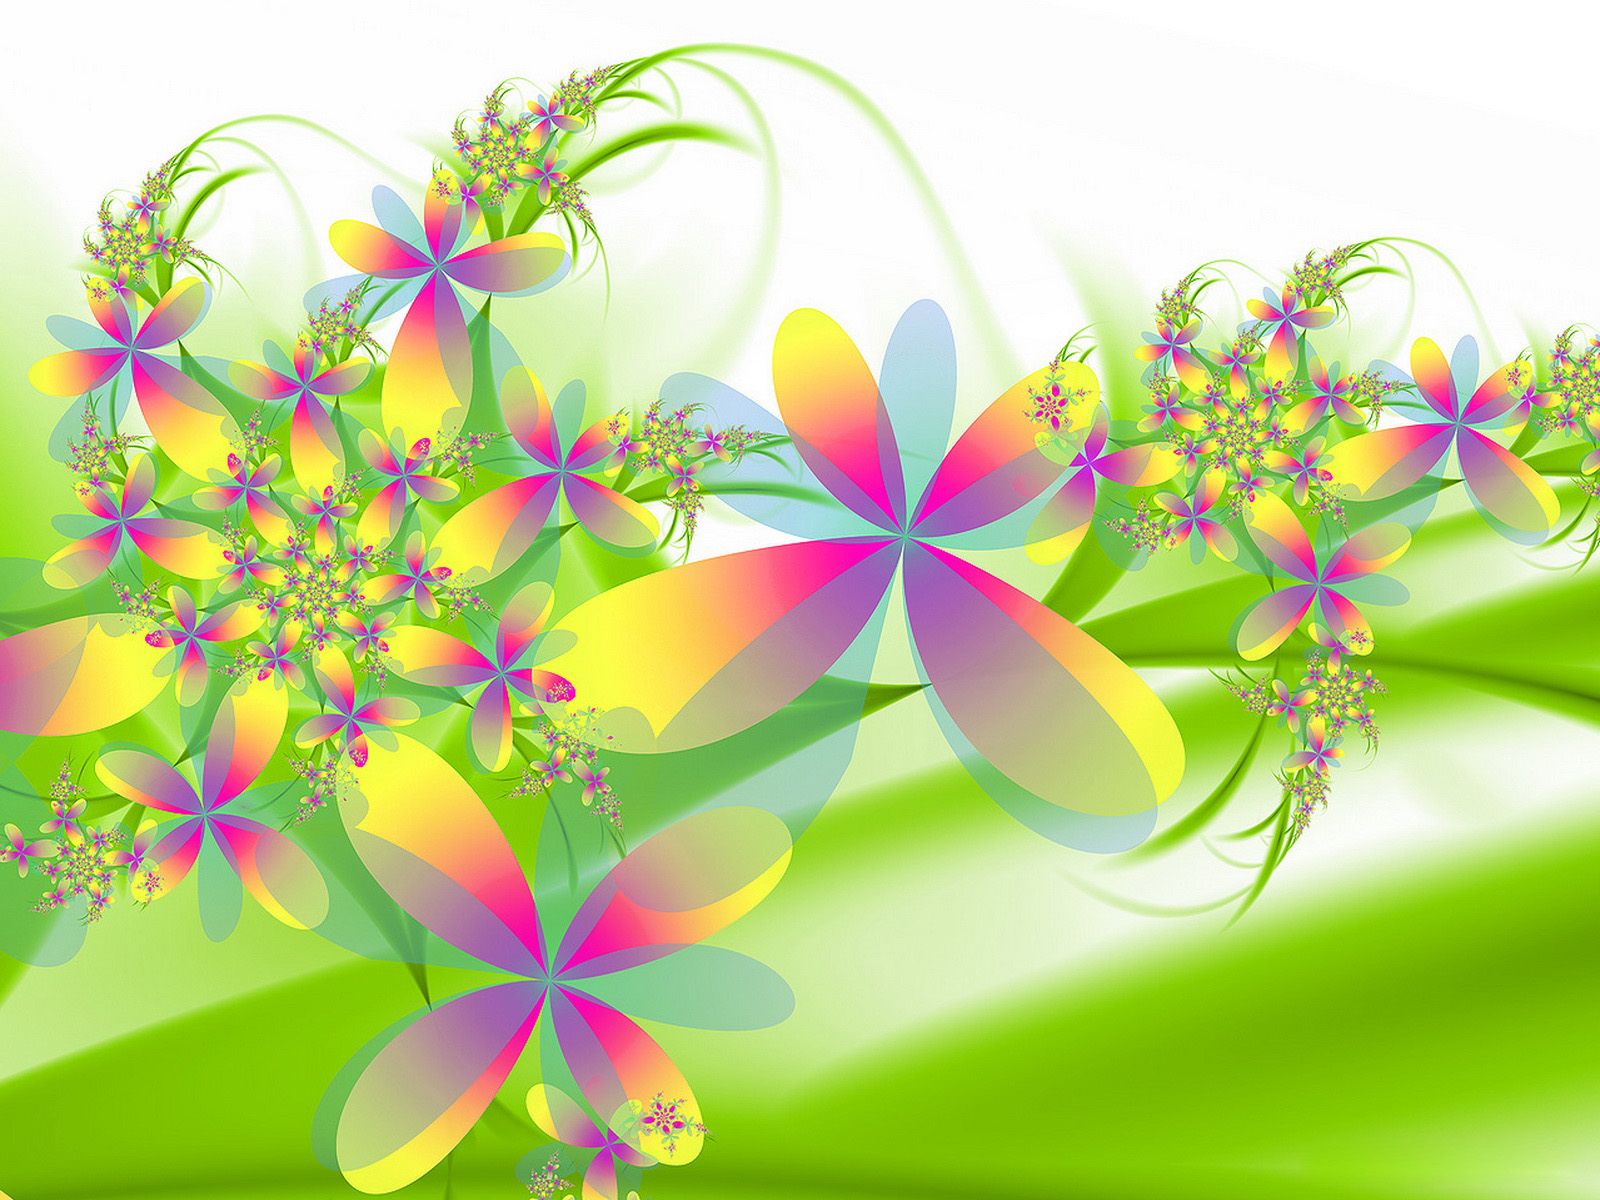 Flowers Wallpapers For Desktop 3d - 1600x1200 Wallpaper 